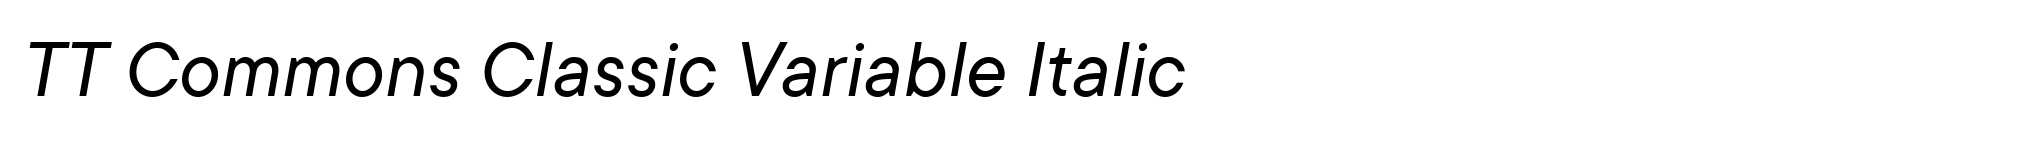 TT Commons Classic Variable Italic image